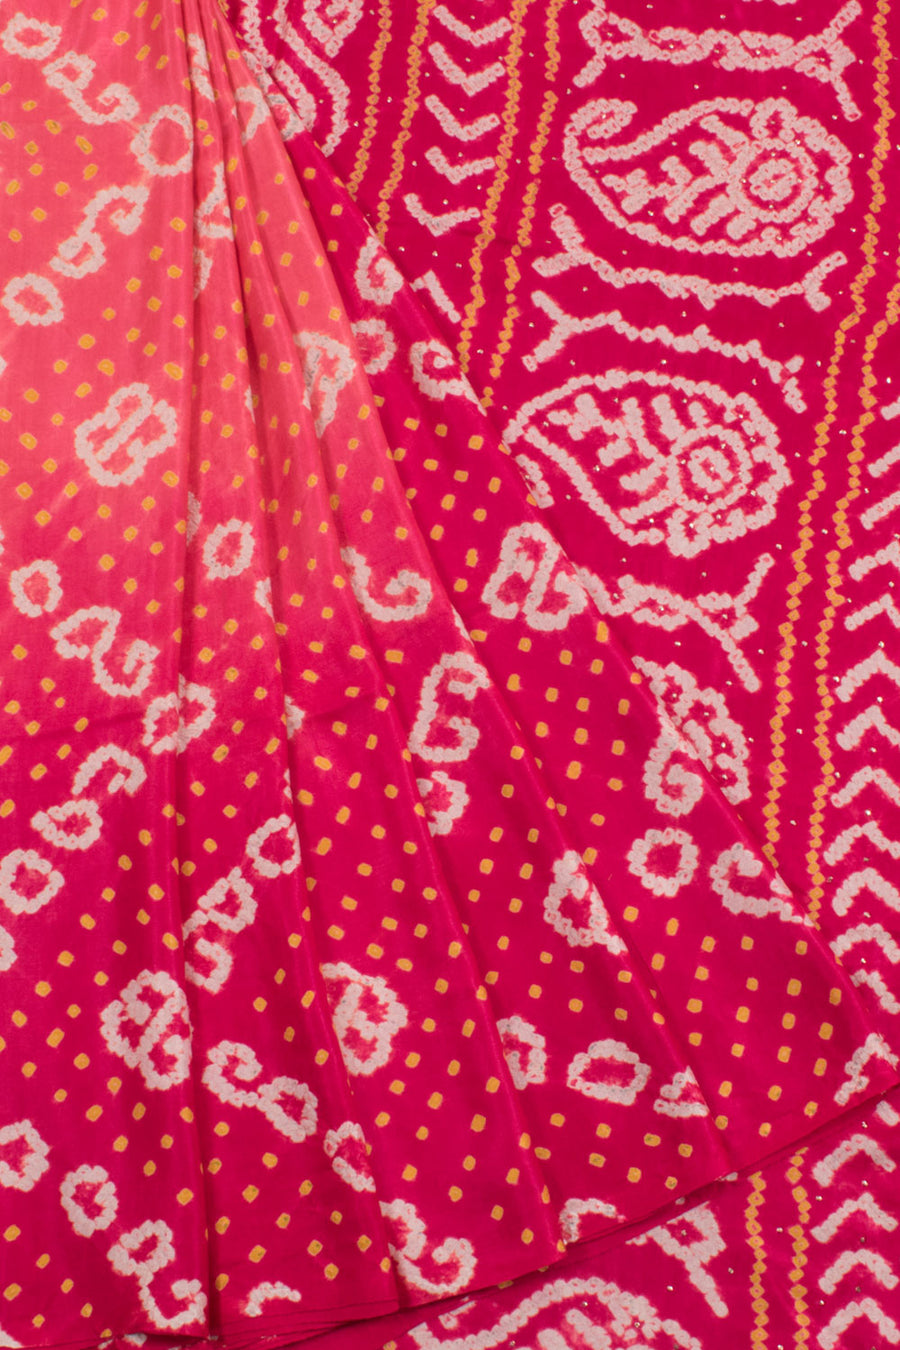 Handcrafted Ombre Dyed Bandhani Gajji Silk Saree with Mukaish Work